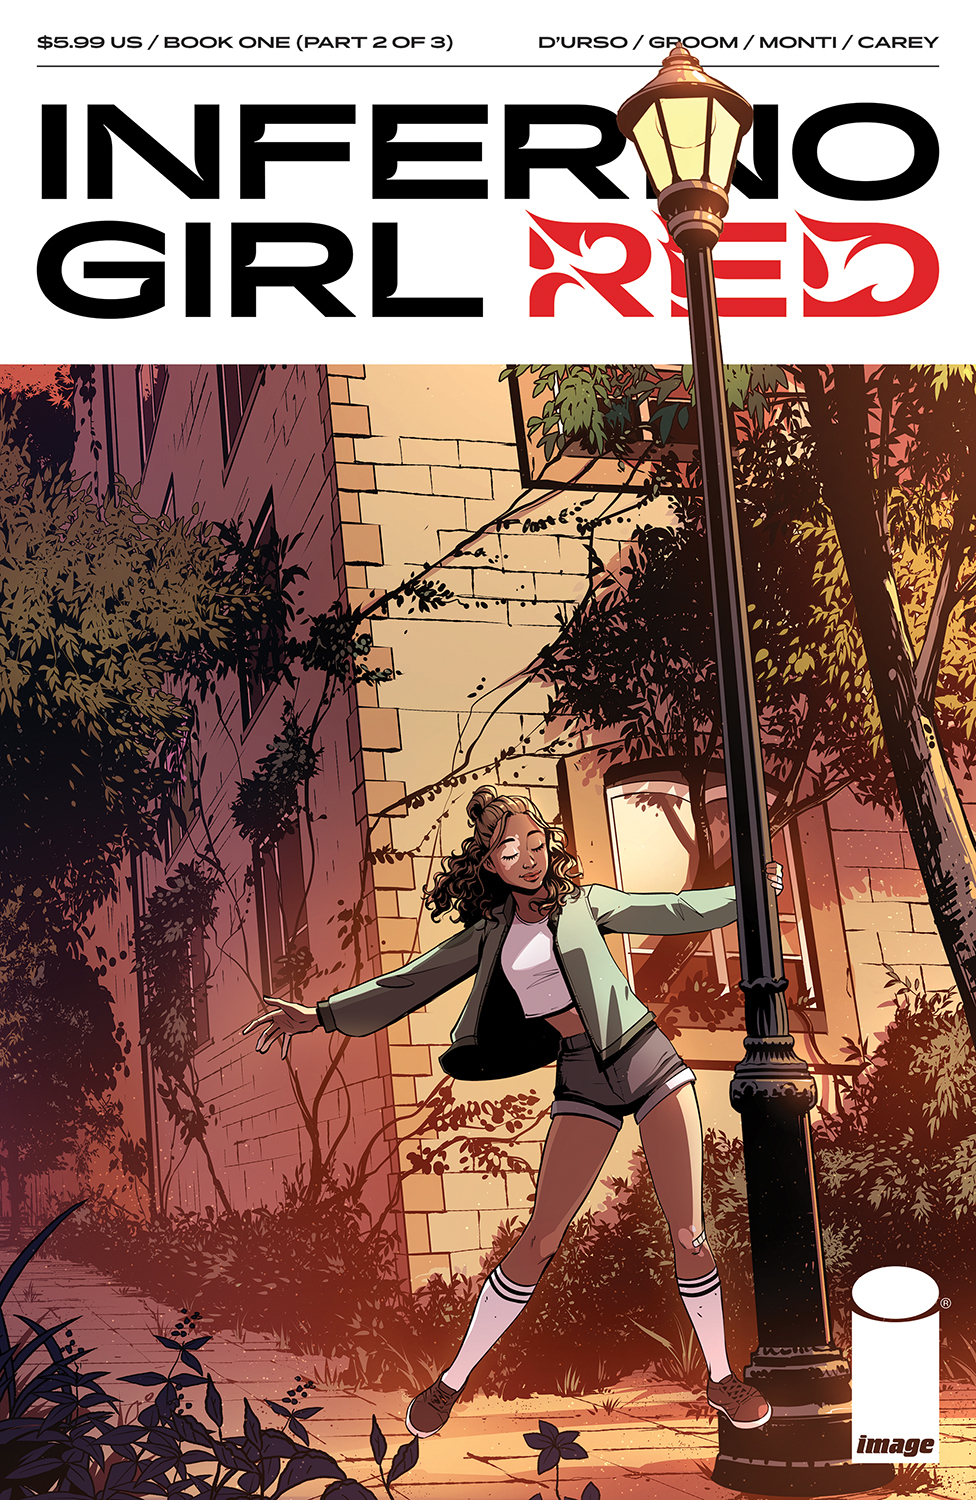 Inferno Girl Red Book One #2 Cover C Lobo Mv (Of 3)